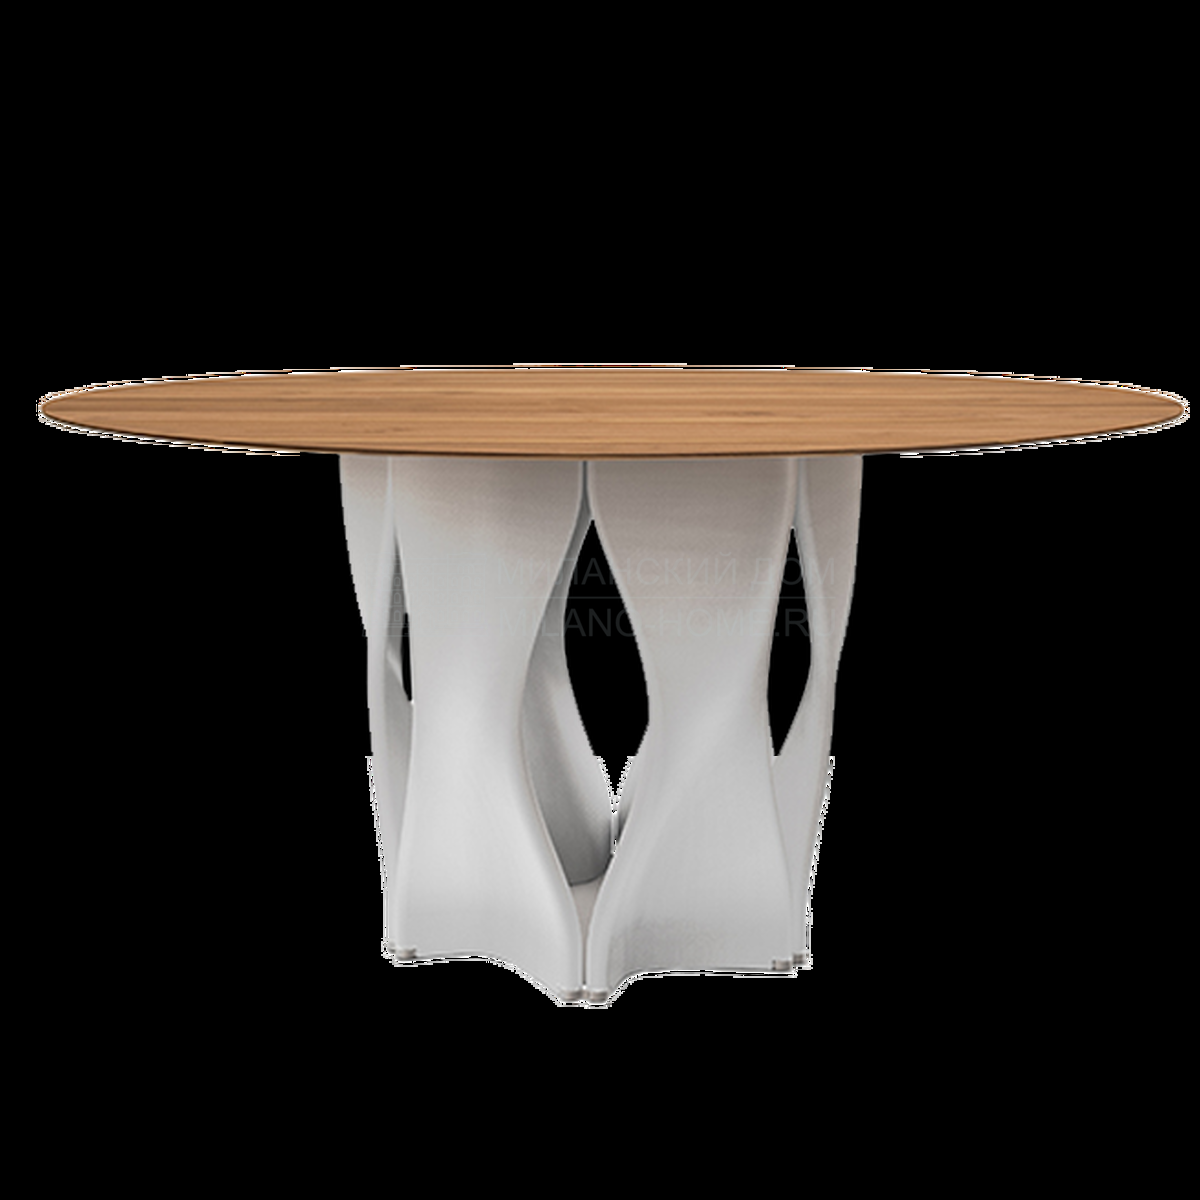 Обеденный стол Mac's table wood&soft 216 из Италии фабрики TONON